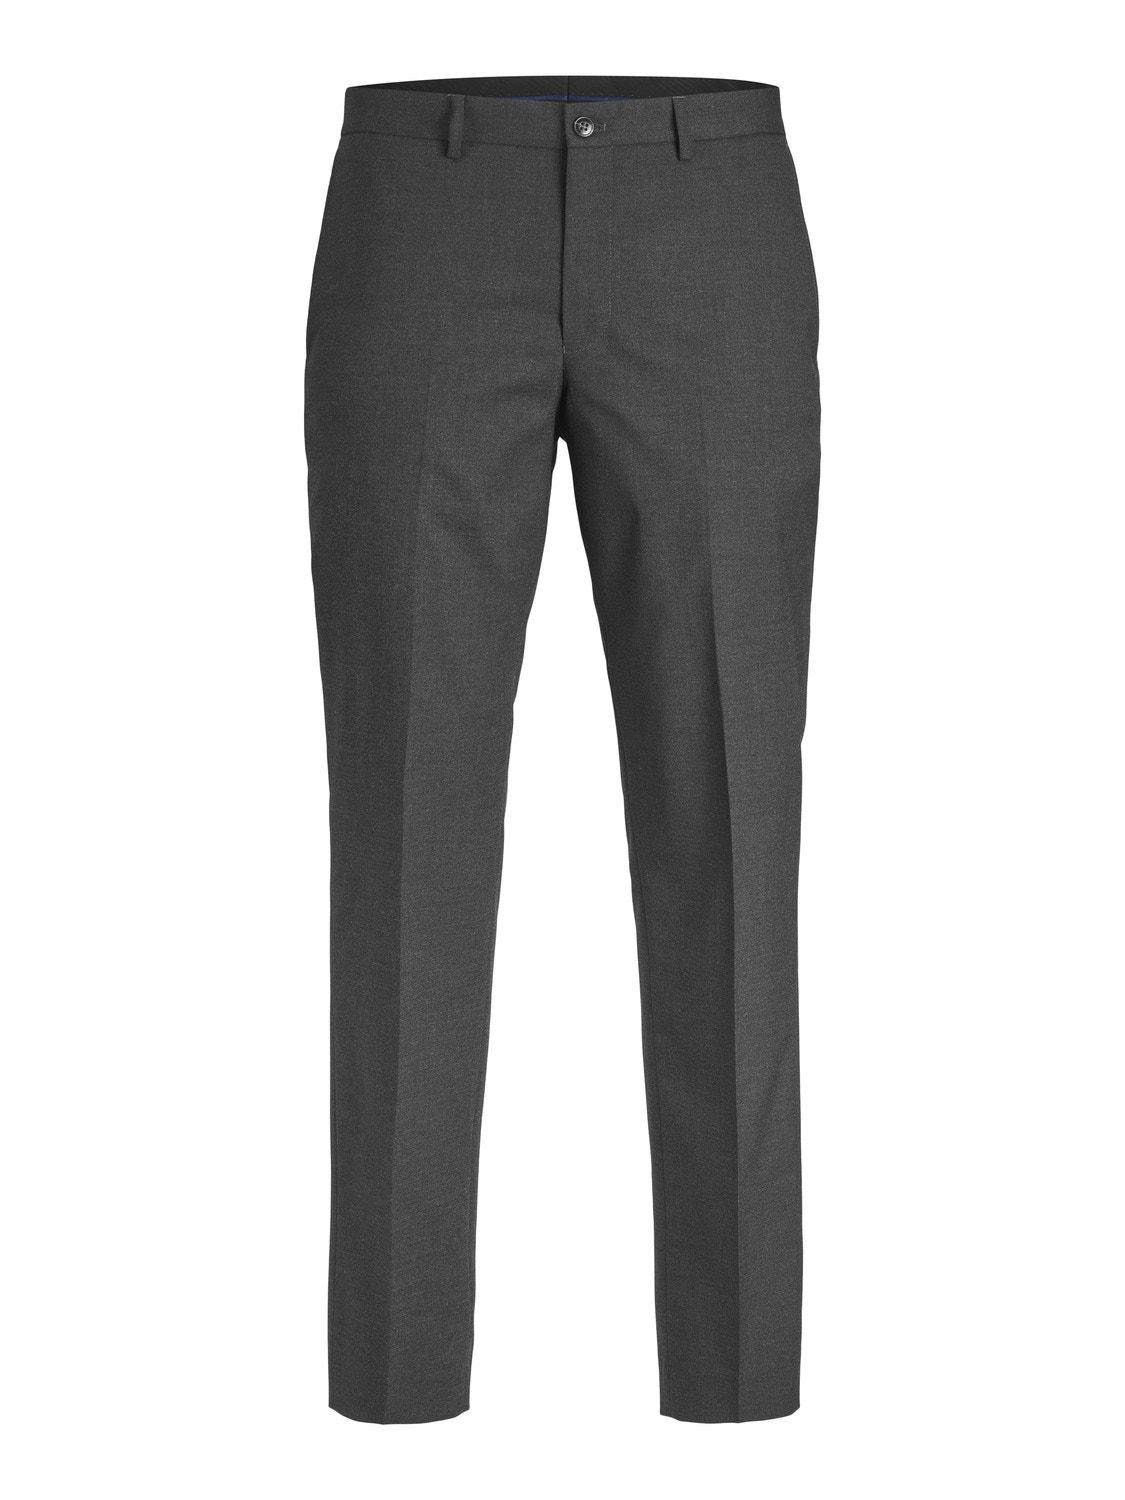 Jack & Jones JPRSOLARIS Slim Fit Tailored Trousers -Dark Grey Melange - 12232115